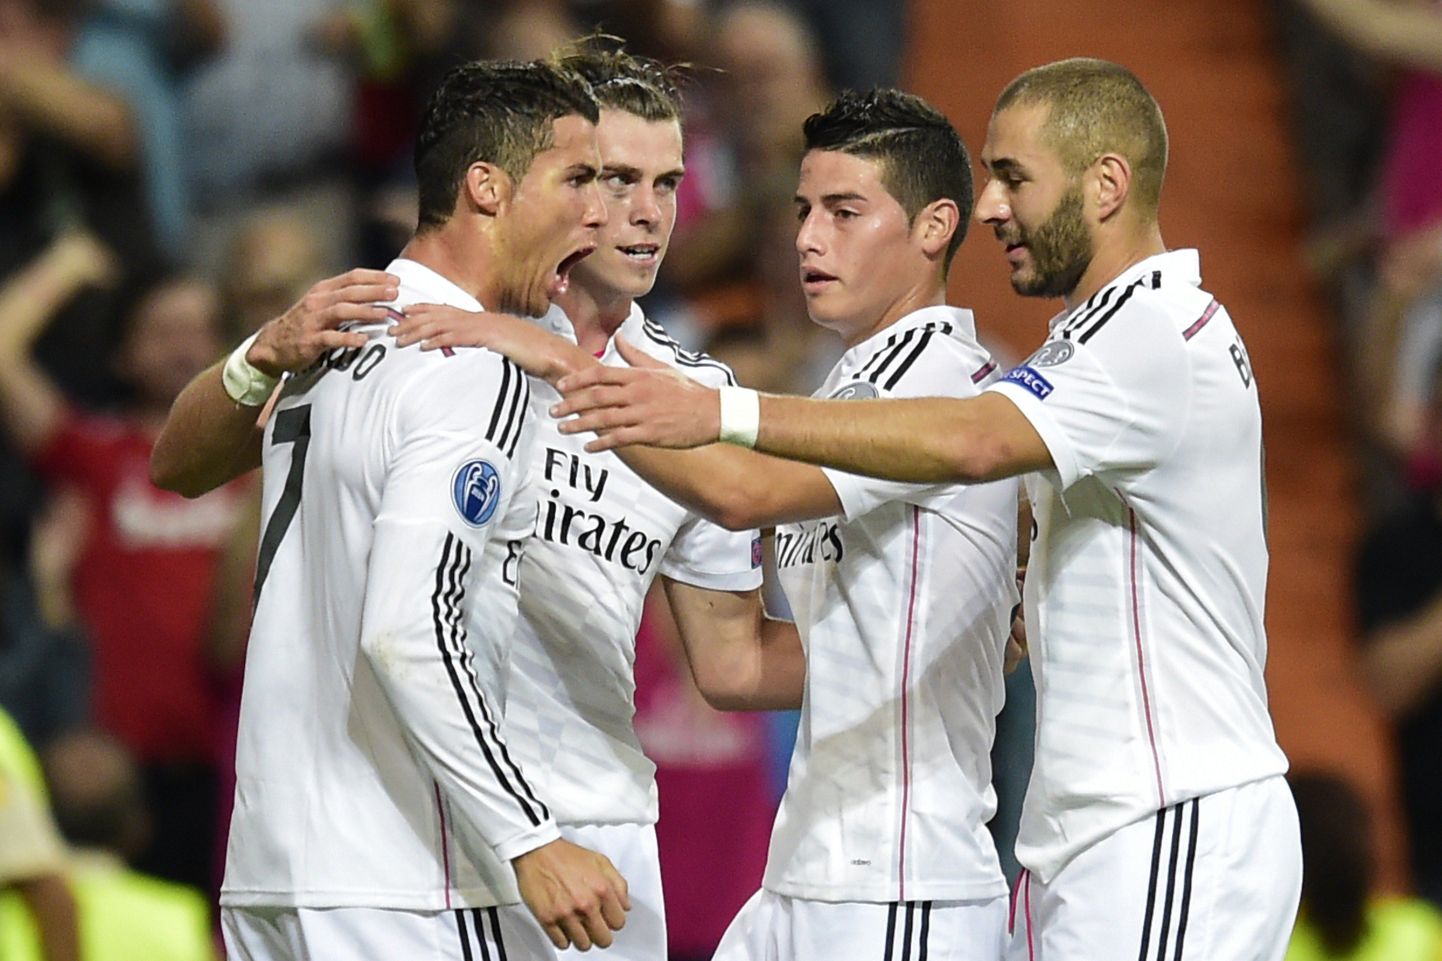 Madridi Reali mängijad Cristiano Ronaldo, Gareth Bale, Karim Benzema ja James Rodriguez järjekordset väravat tähistamas.